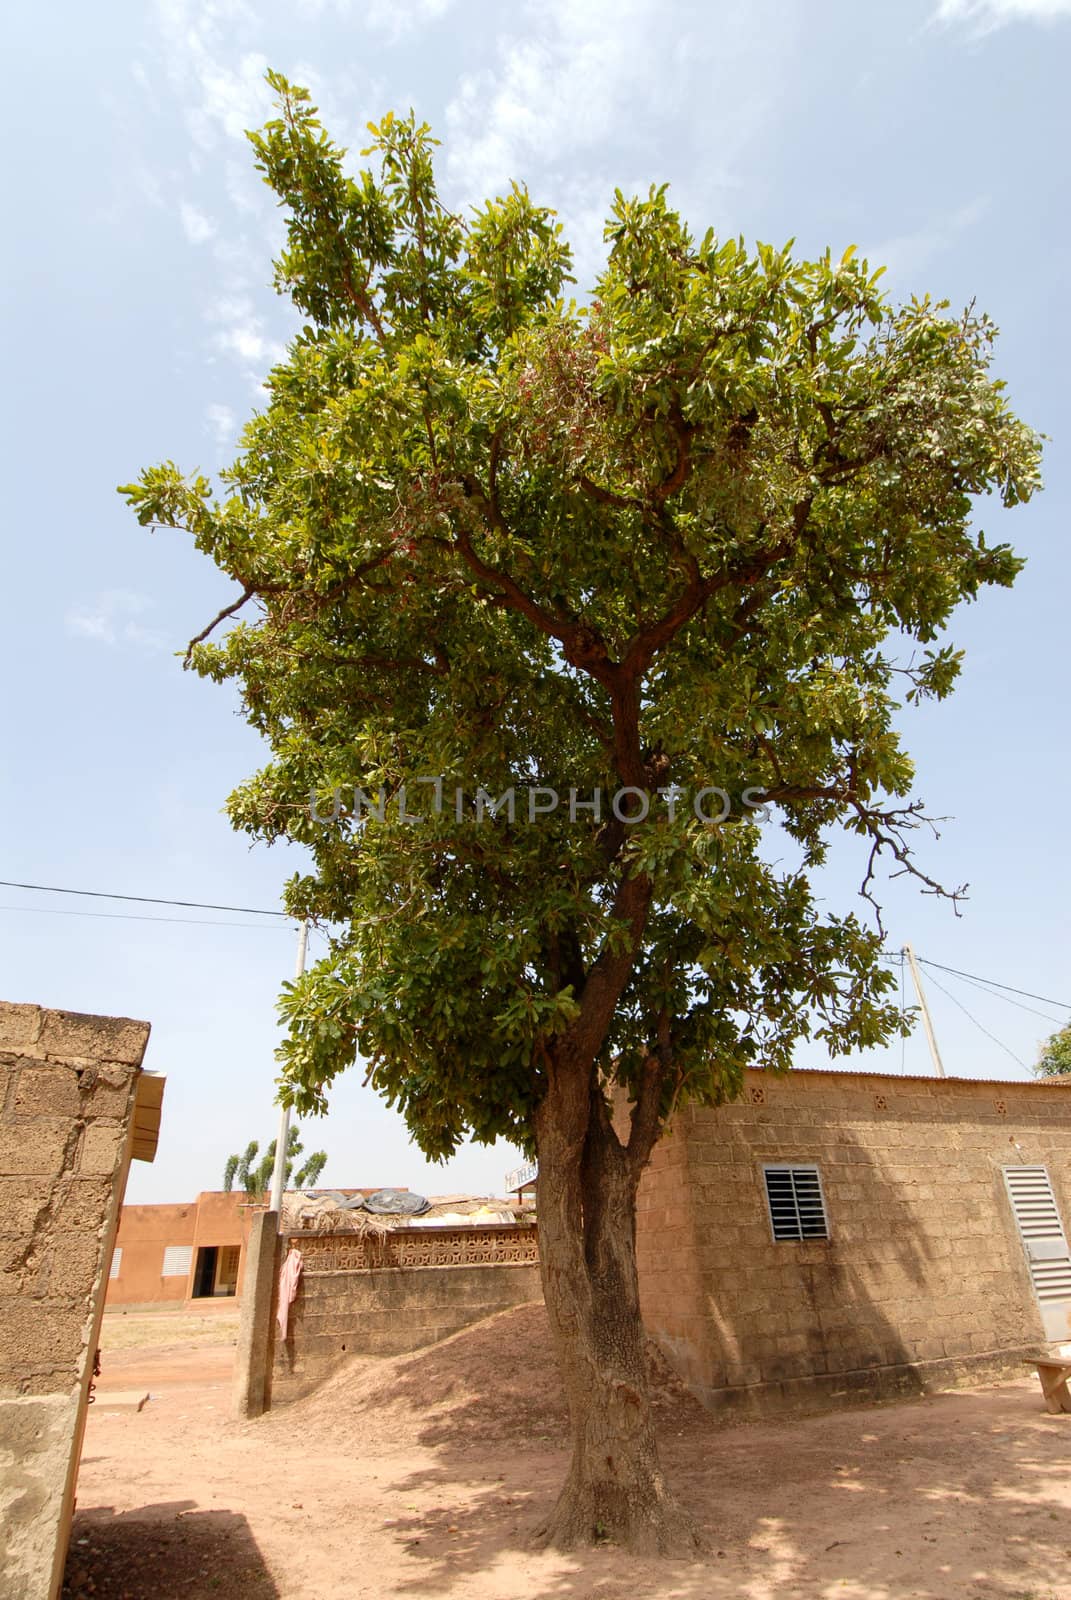 Africa, Burkina Faso shea tree